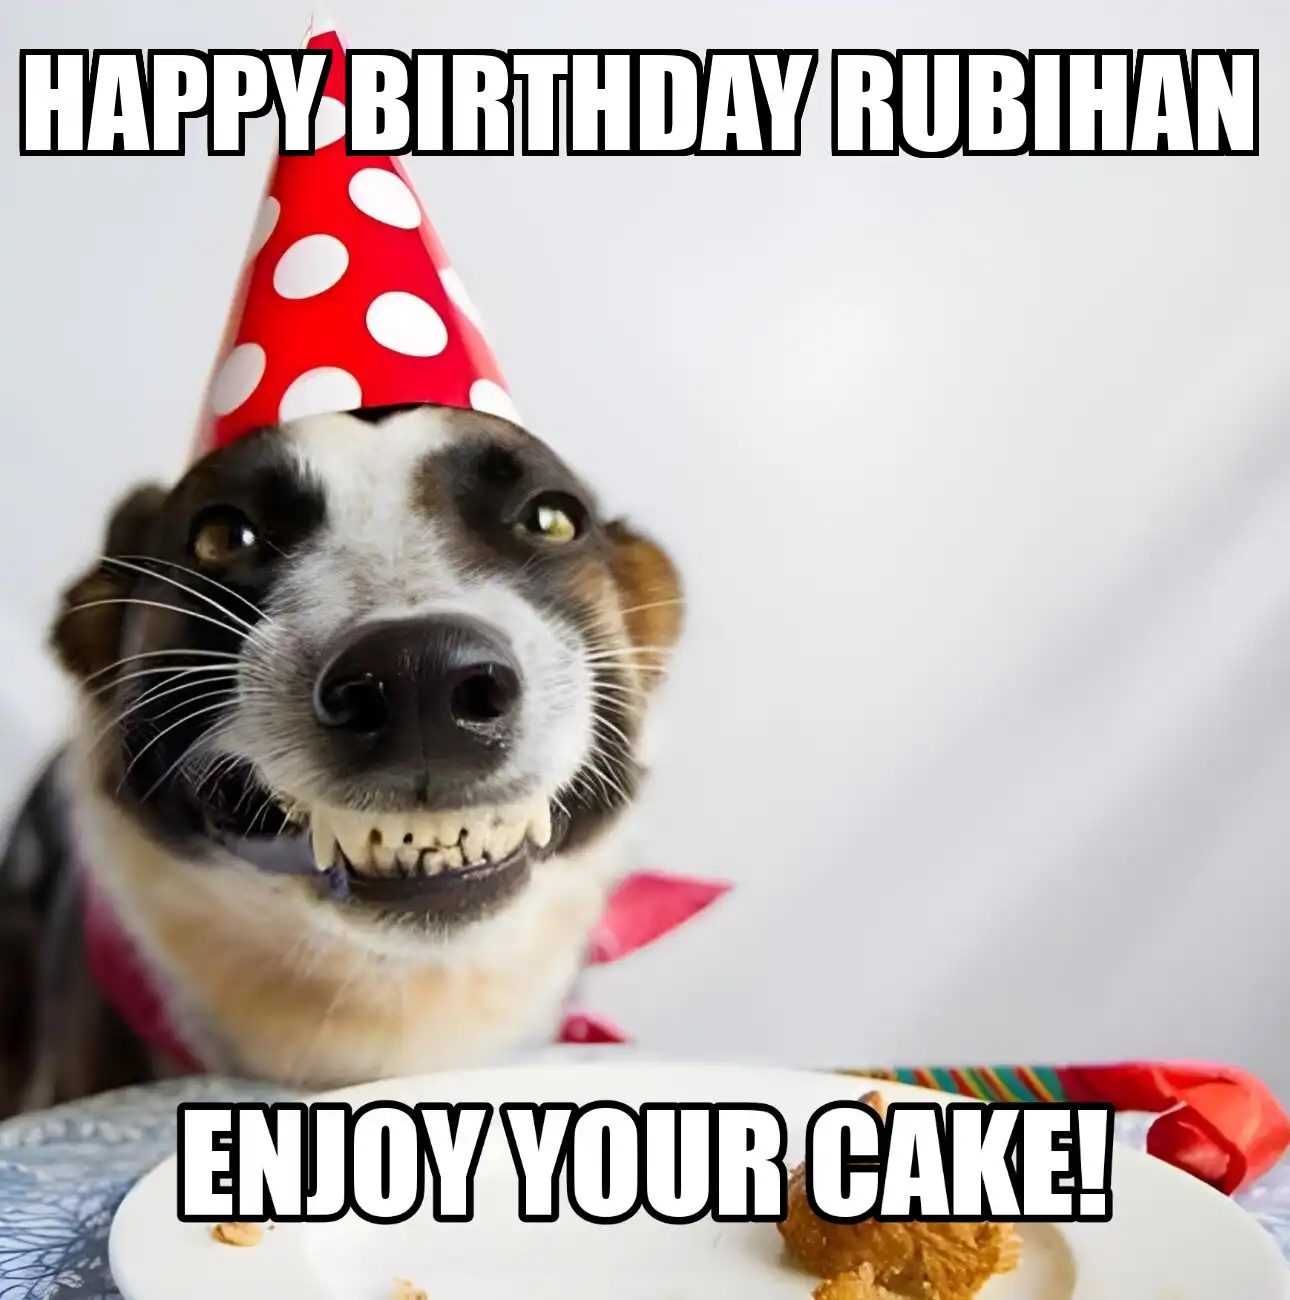 Happy Birthday Rubihan Enjoy Your Cake Dog Meme